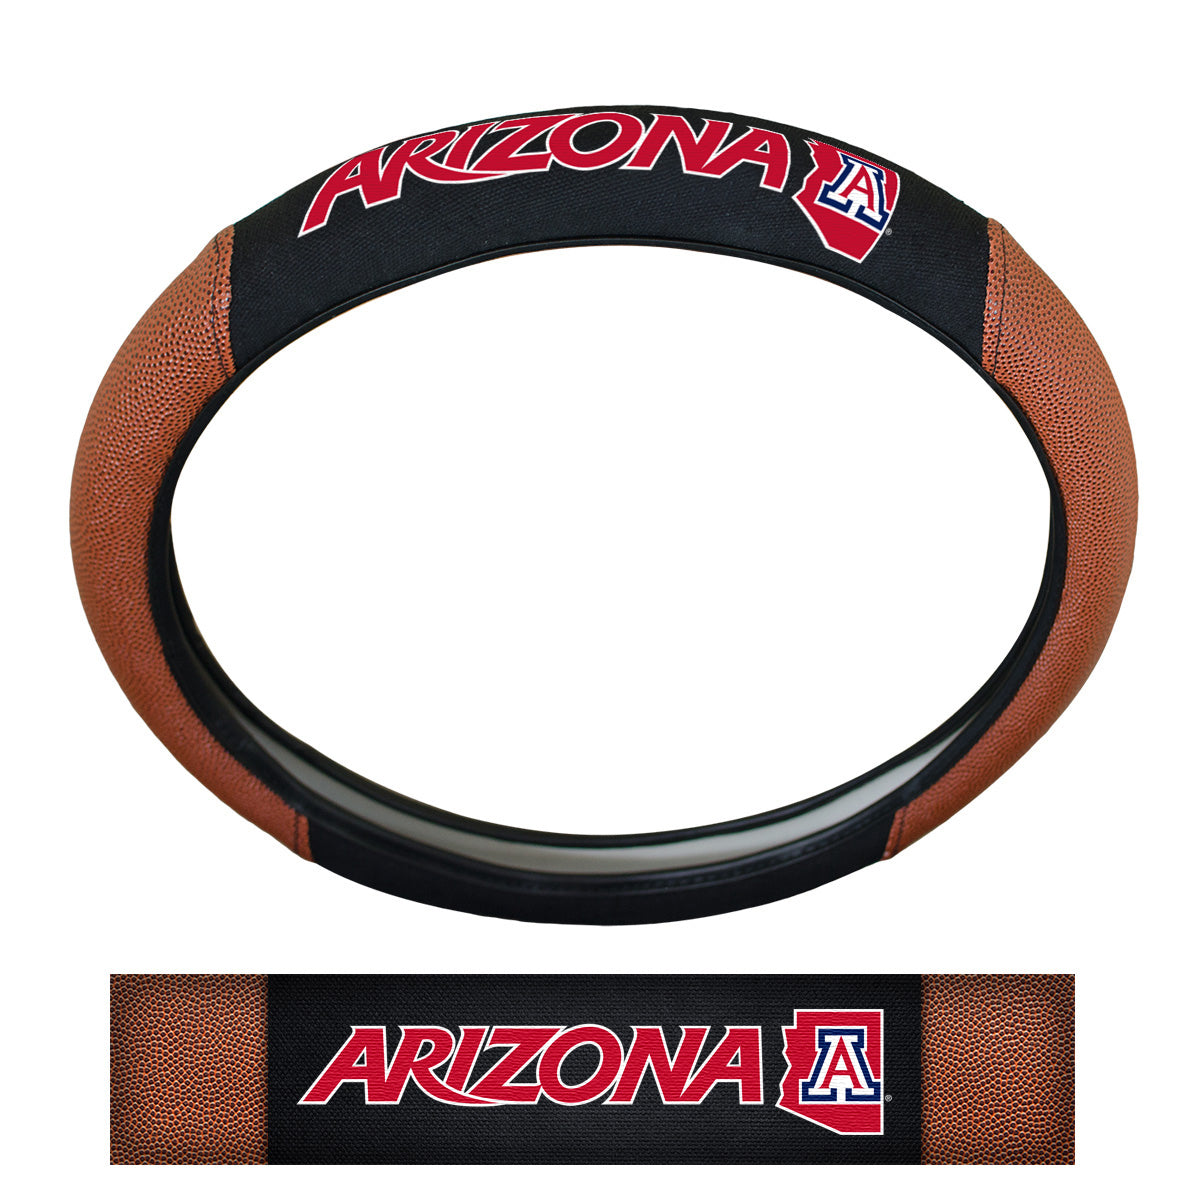 Arizona Wildcats Sports Grip Steering Wheel Cover